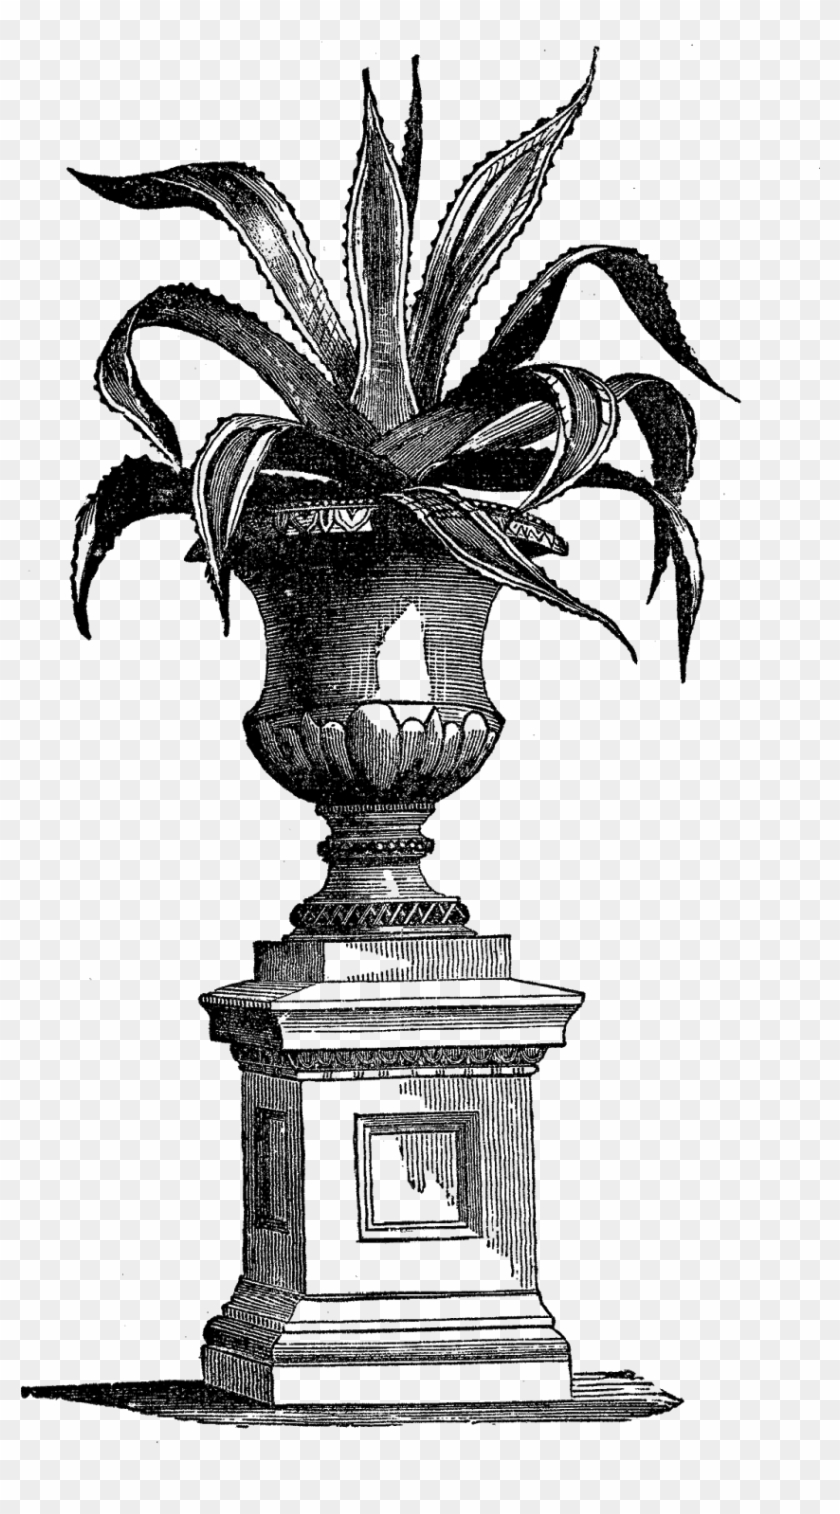 Digital Plant Image Transfer - Victorian Indoor Plant Pots Clipart #5277652